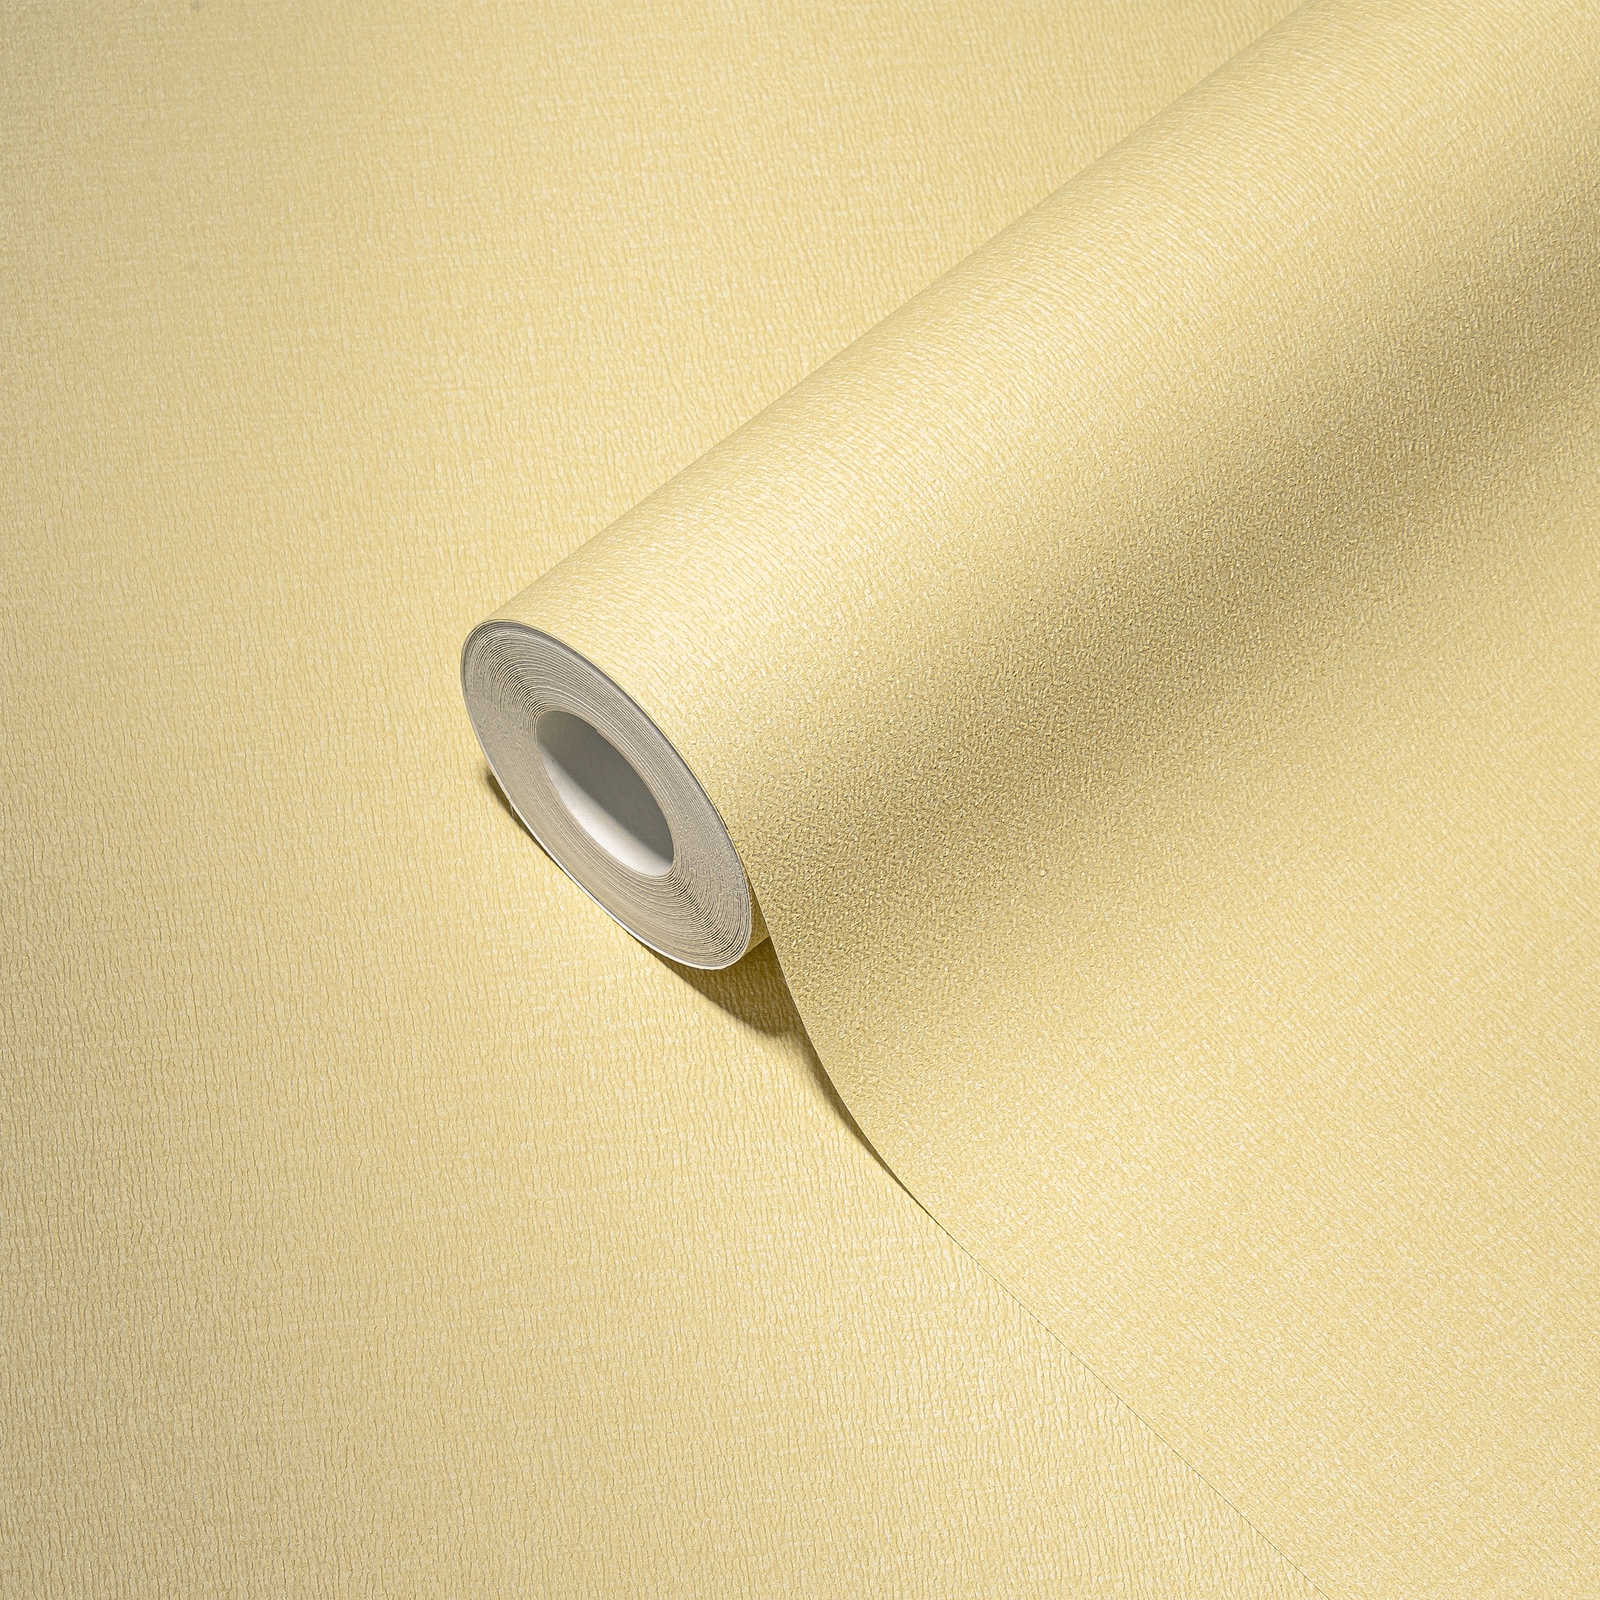             Plain non-woven wallpaper in a warm shade - yellow
        